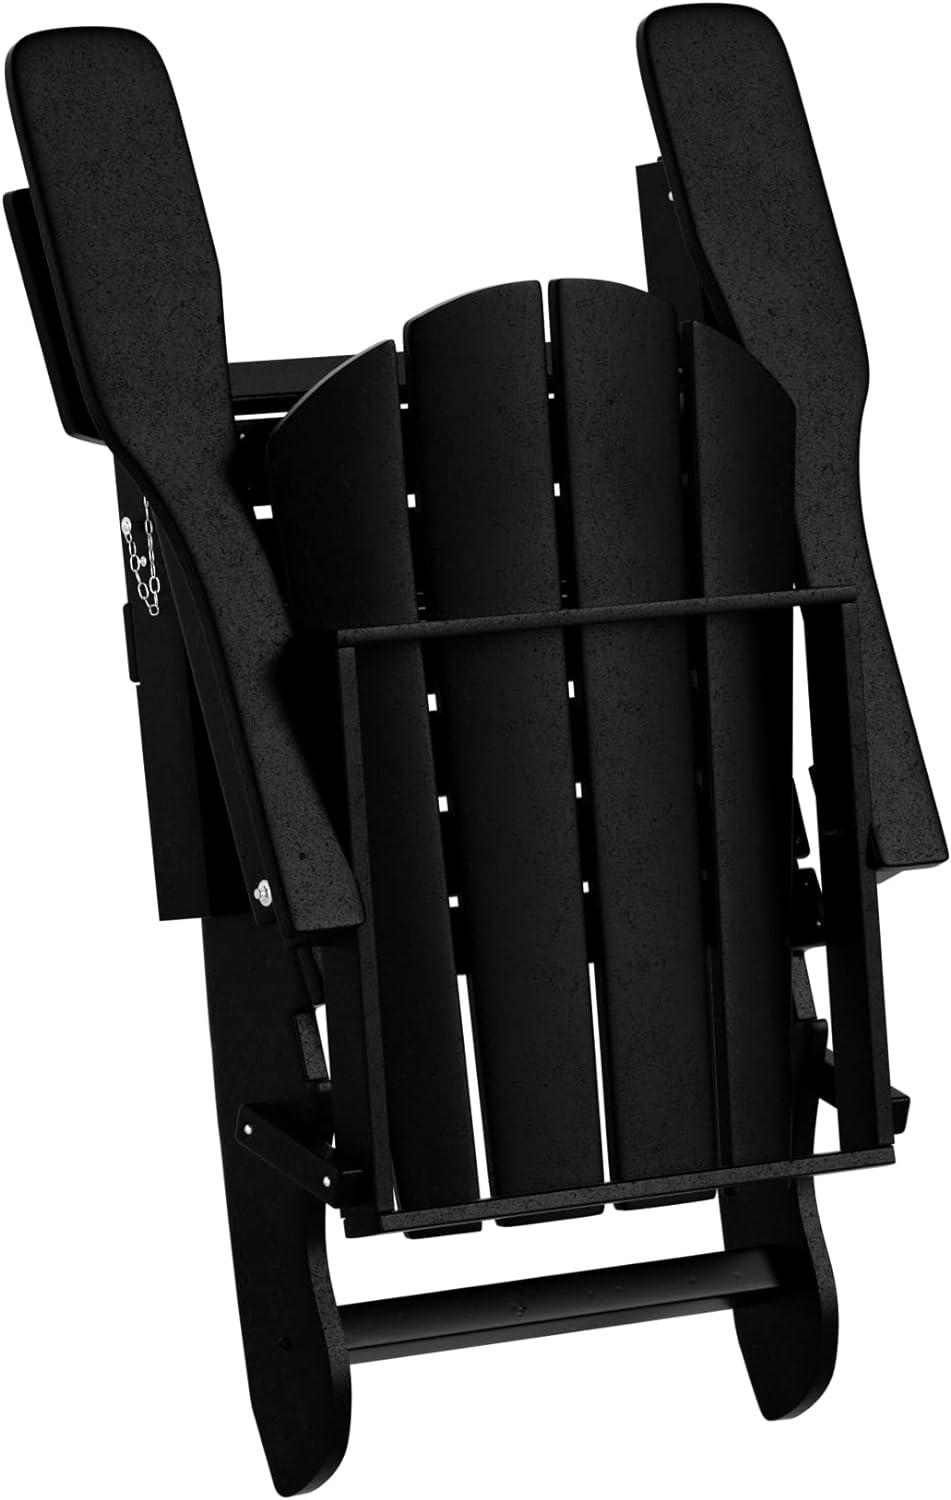 Sleek Black Polyethylene Folding Adirondack Chair Set